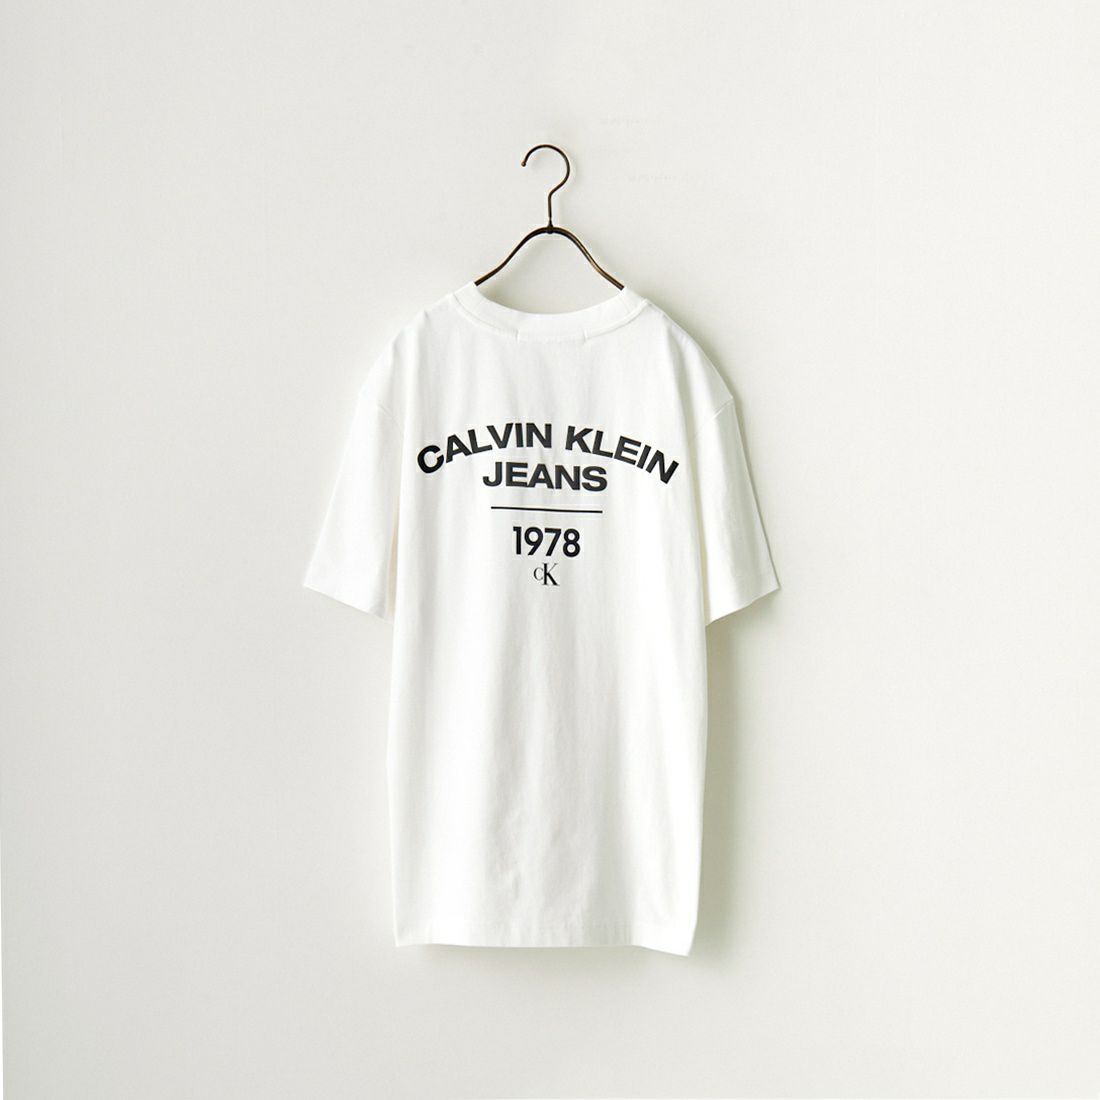 CALVIN KLEIN JEANS・Tシャツ - daterightstuff.com